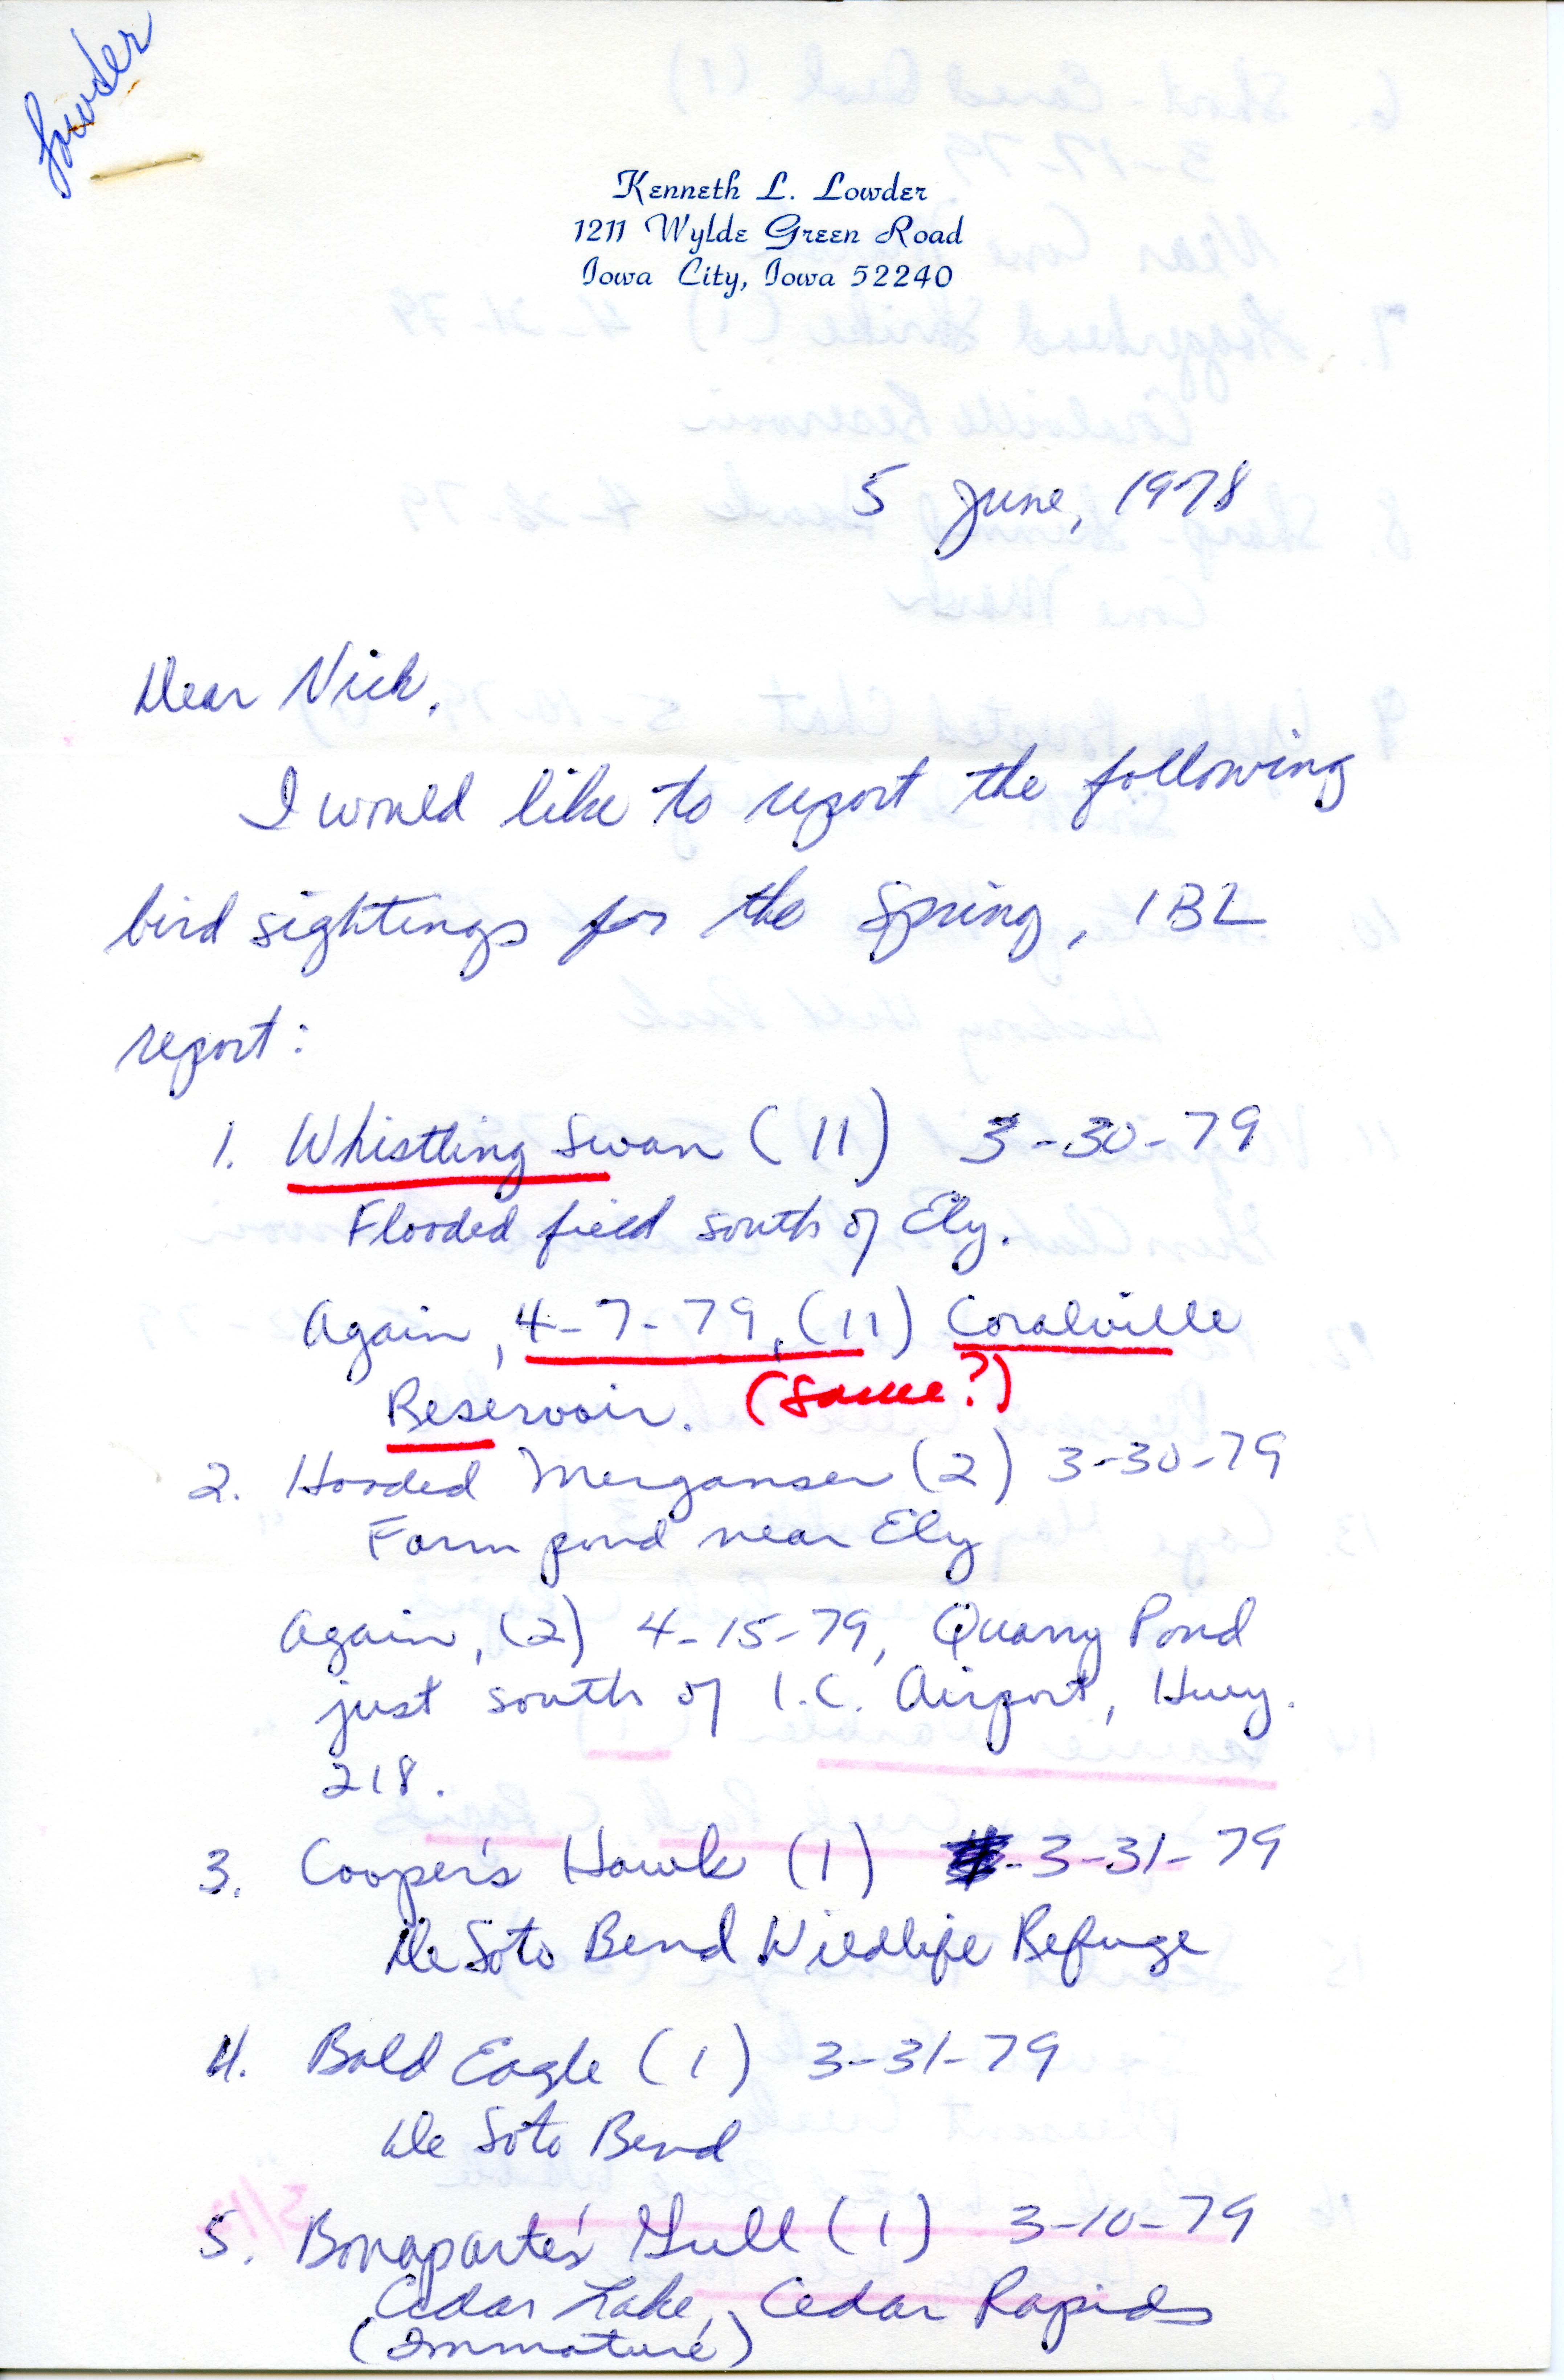 Ken Lowder letter to Nicholas S. Halmi regarding spring bird sightings, June 5, 1979